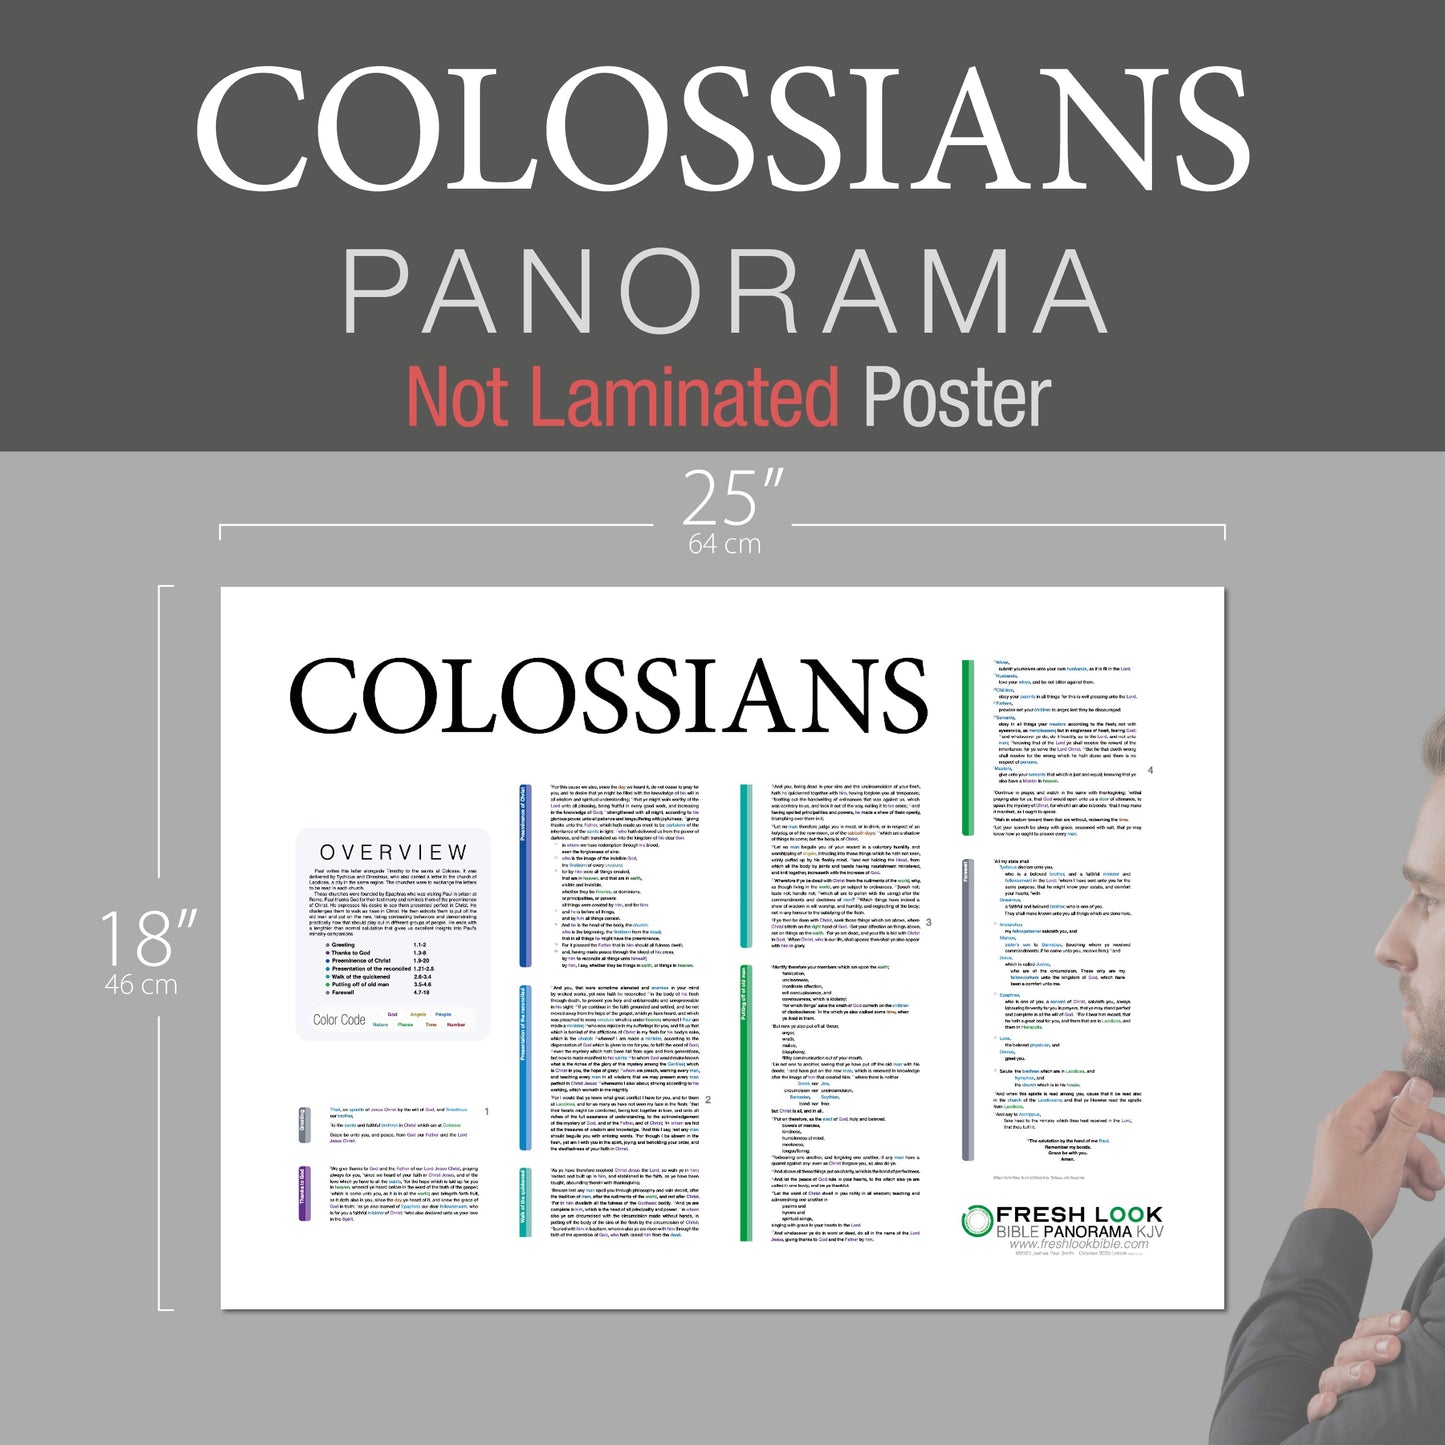 Colossians Panorama Not Laminated